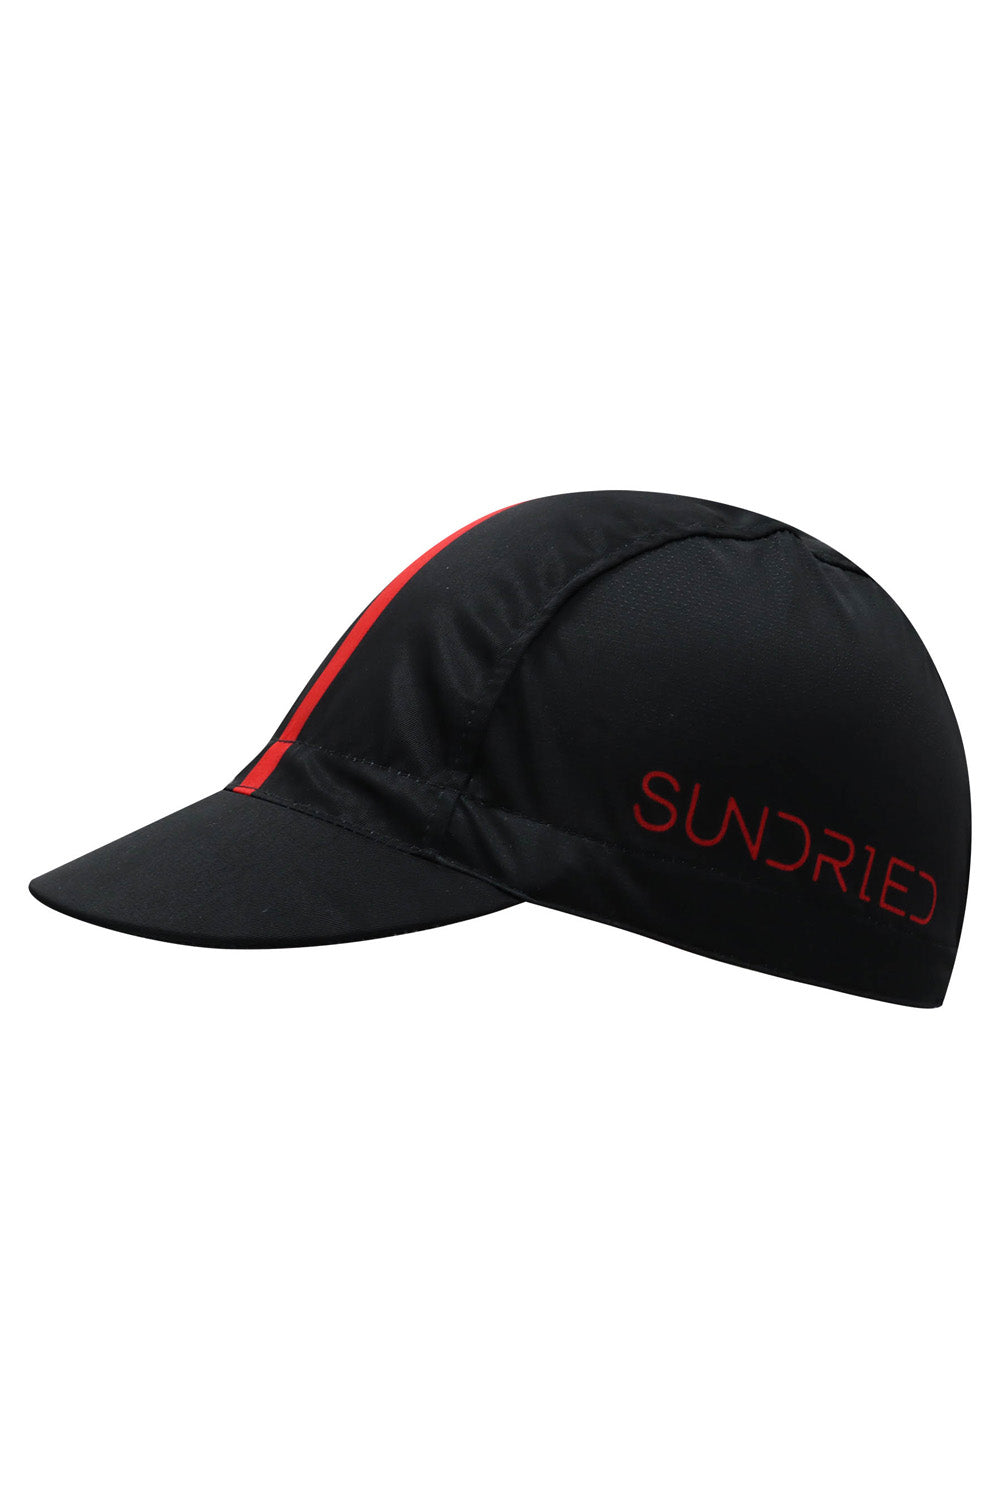 Sundried Stripe Cycle Cap Hats Black SD0435 Black Activewear